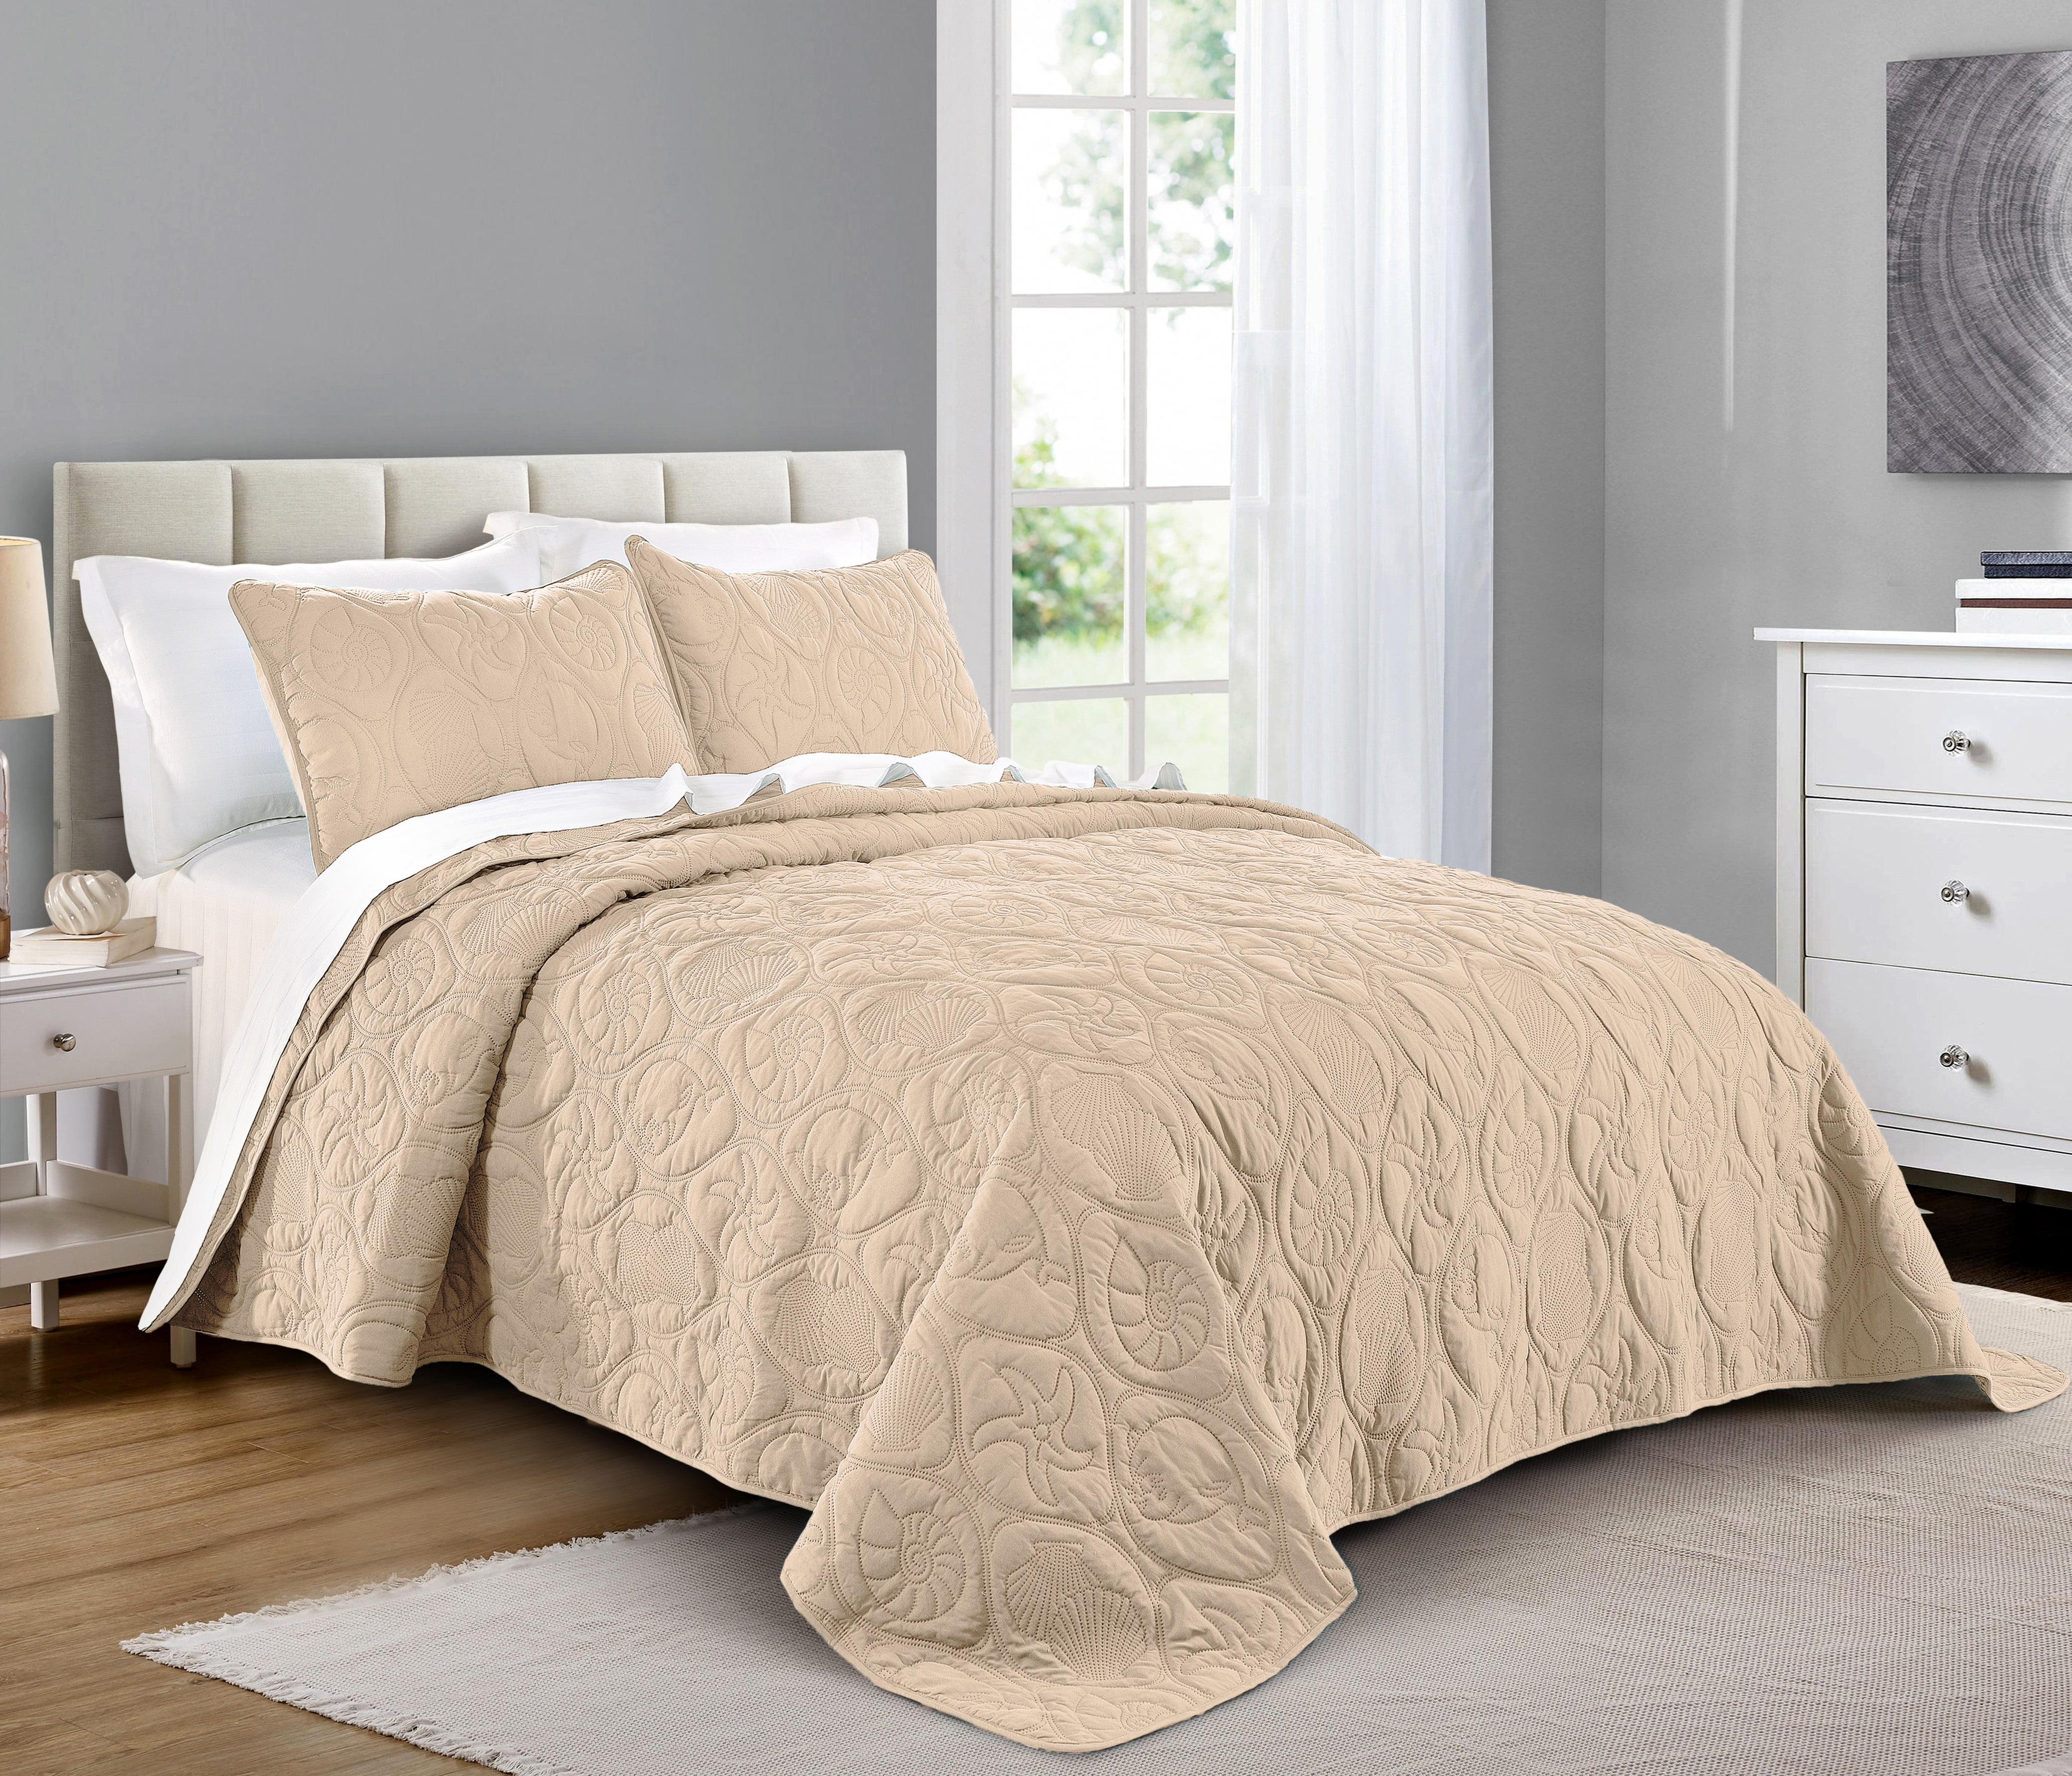 Soft Microfiber Lightweight Bedspread Full Size Quilt All-Season Coverlet Set 